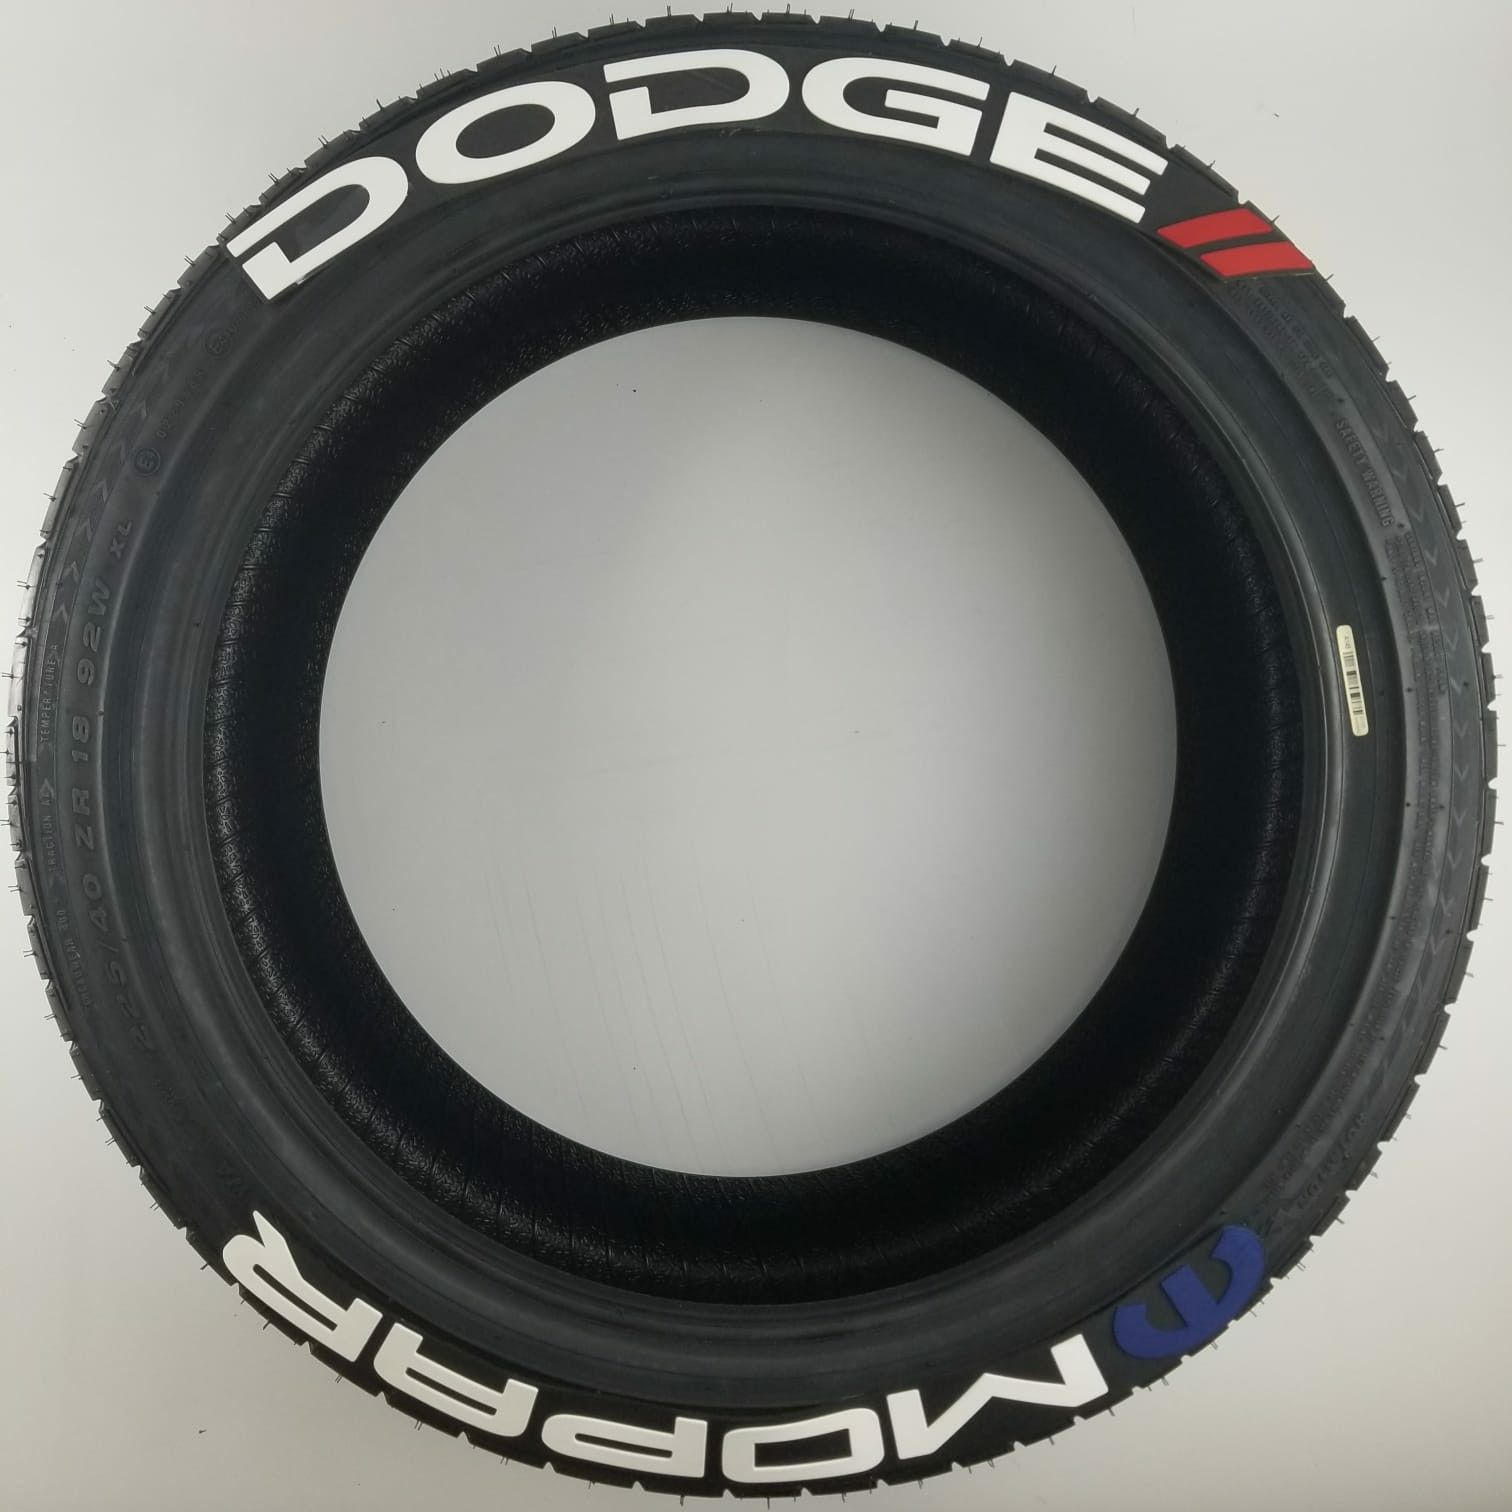 DODGE MOPAR Tire Lettering 1.25 inch 8 decals